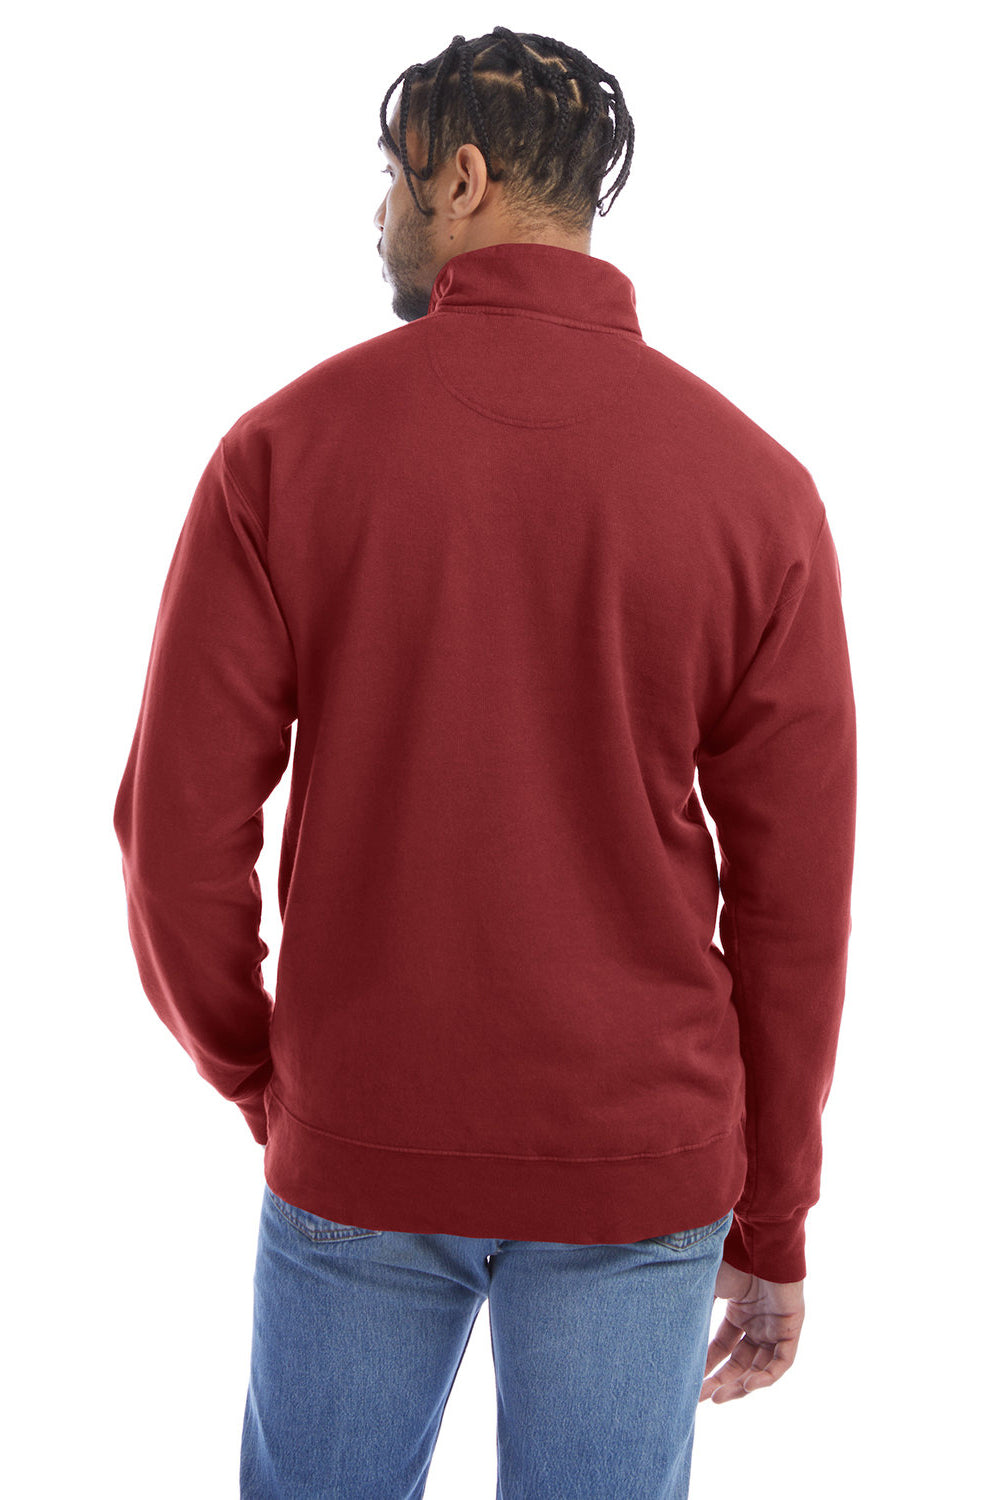 ComfortWash by Hanes GDH425 Mens 1/4 Zip Sweatshirt Cayenne Red Back